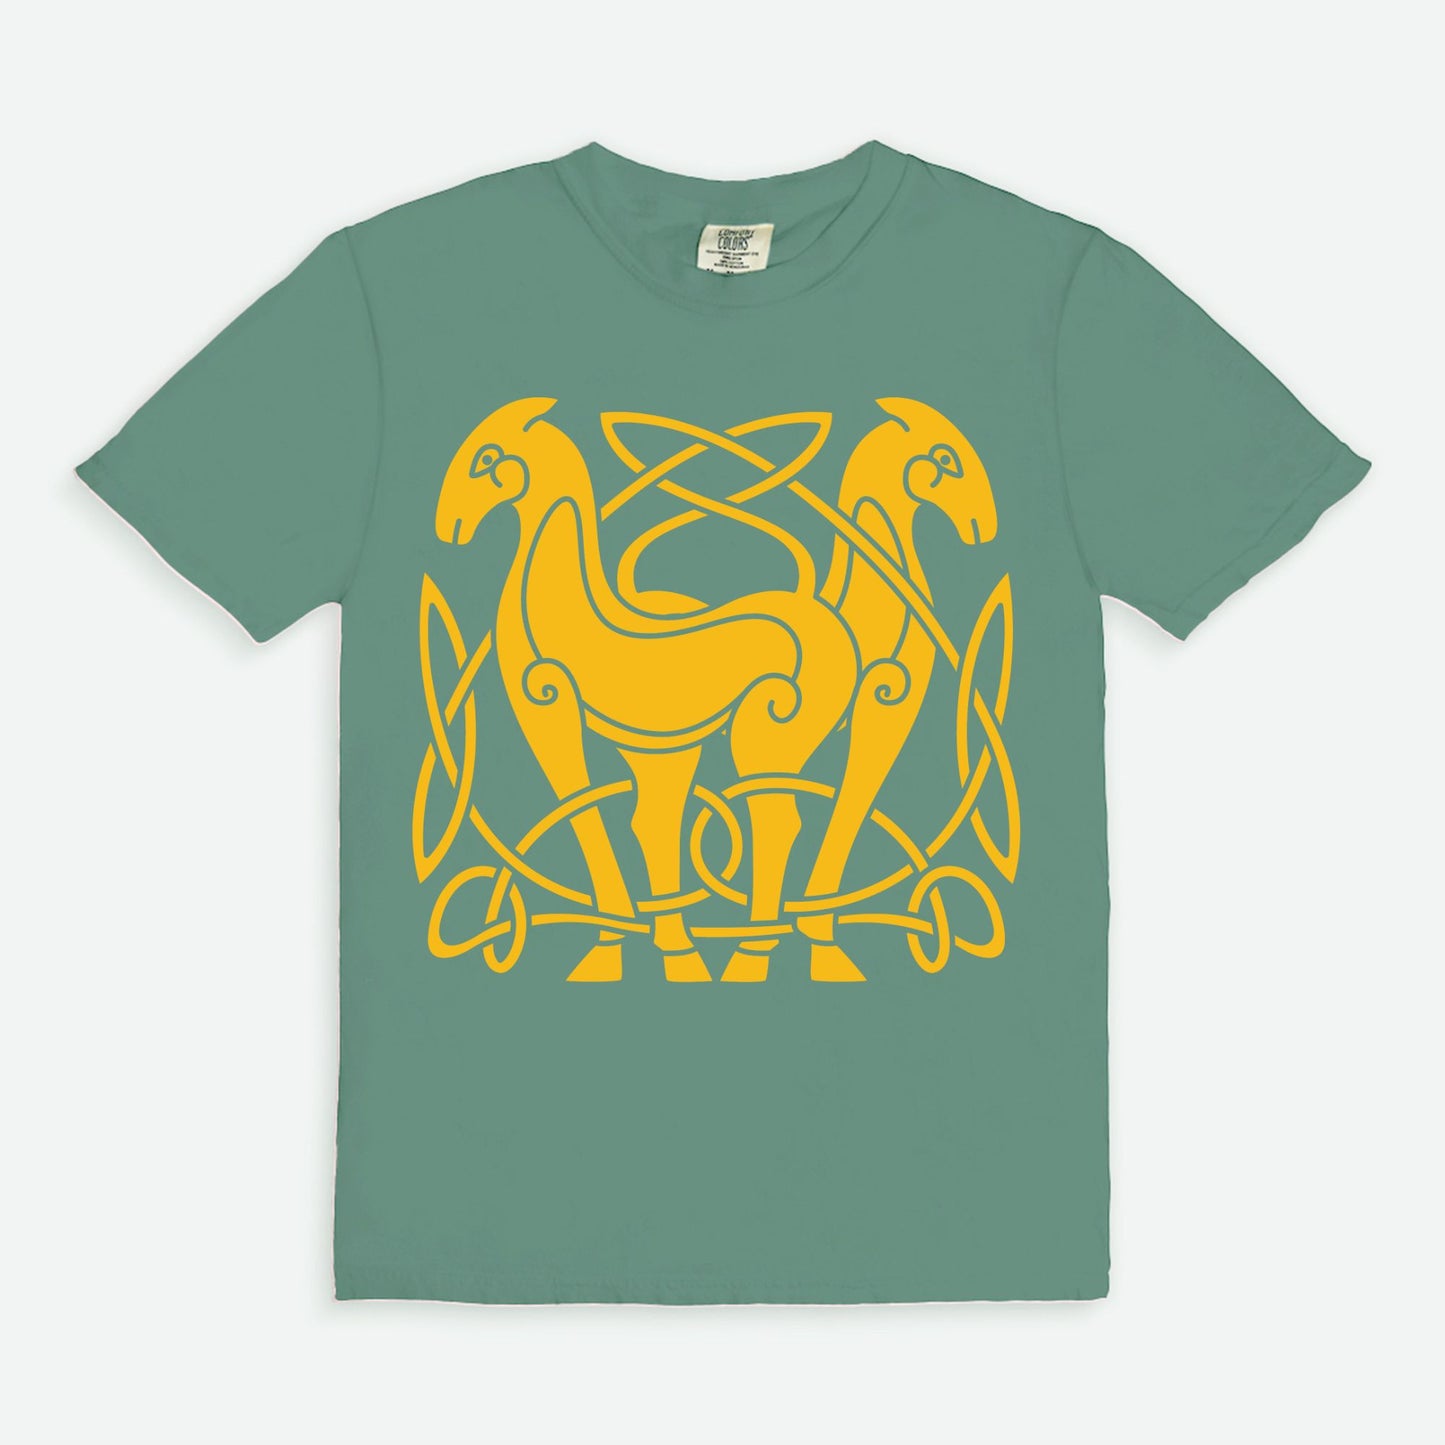 Celtic Horse Epona  Design Tshirt by Sorcery Soap + Hocus Pocus Craft